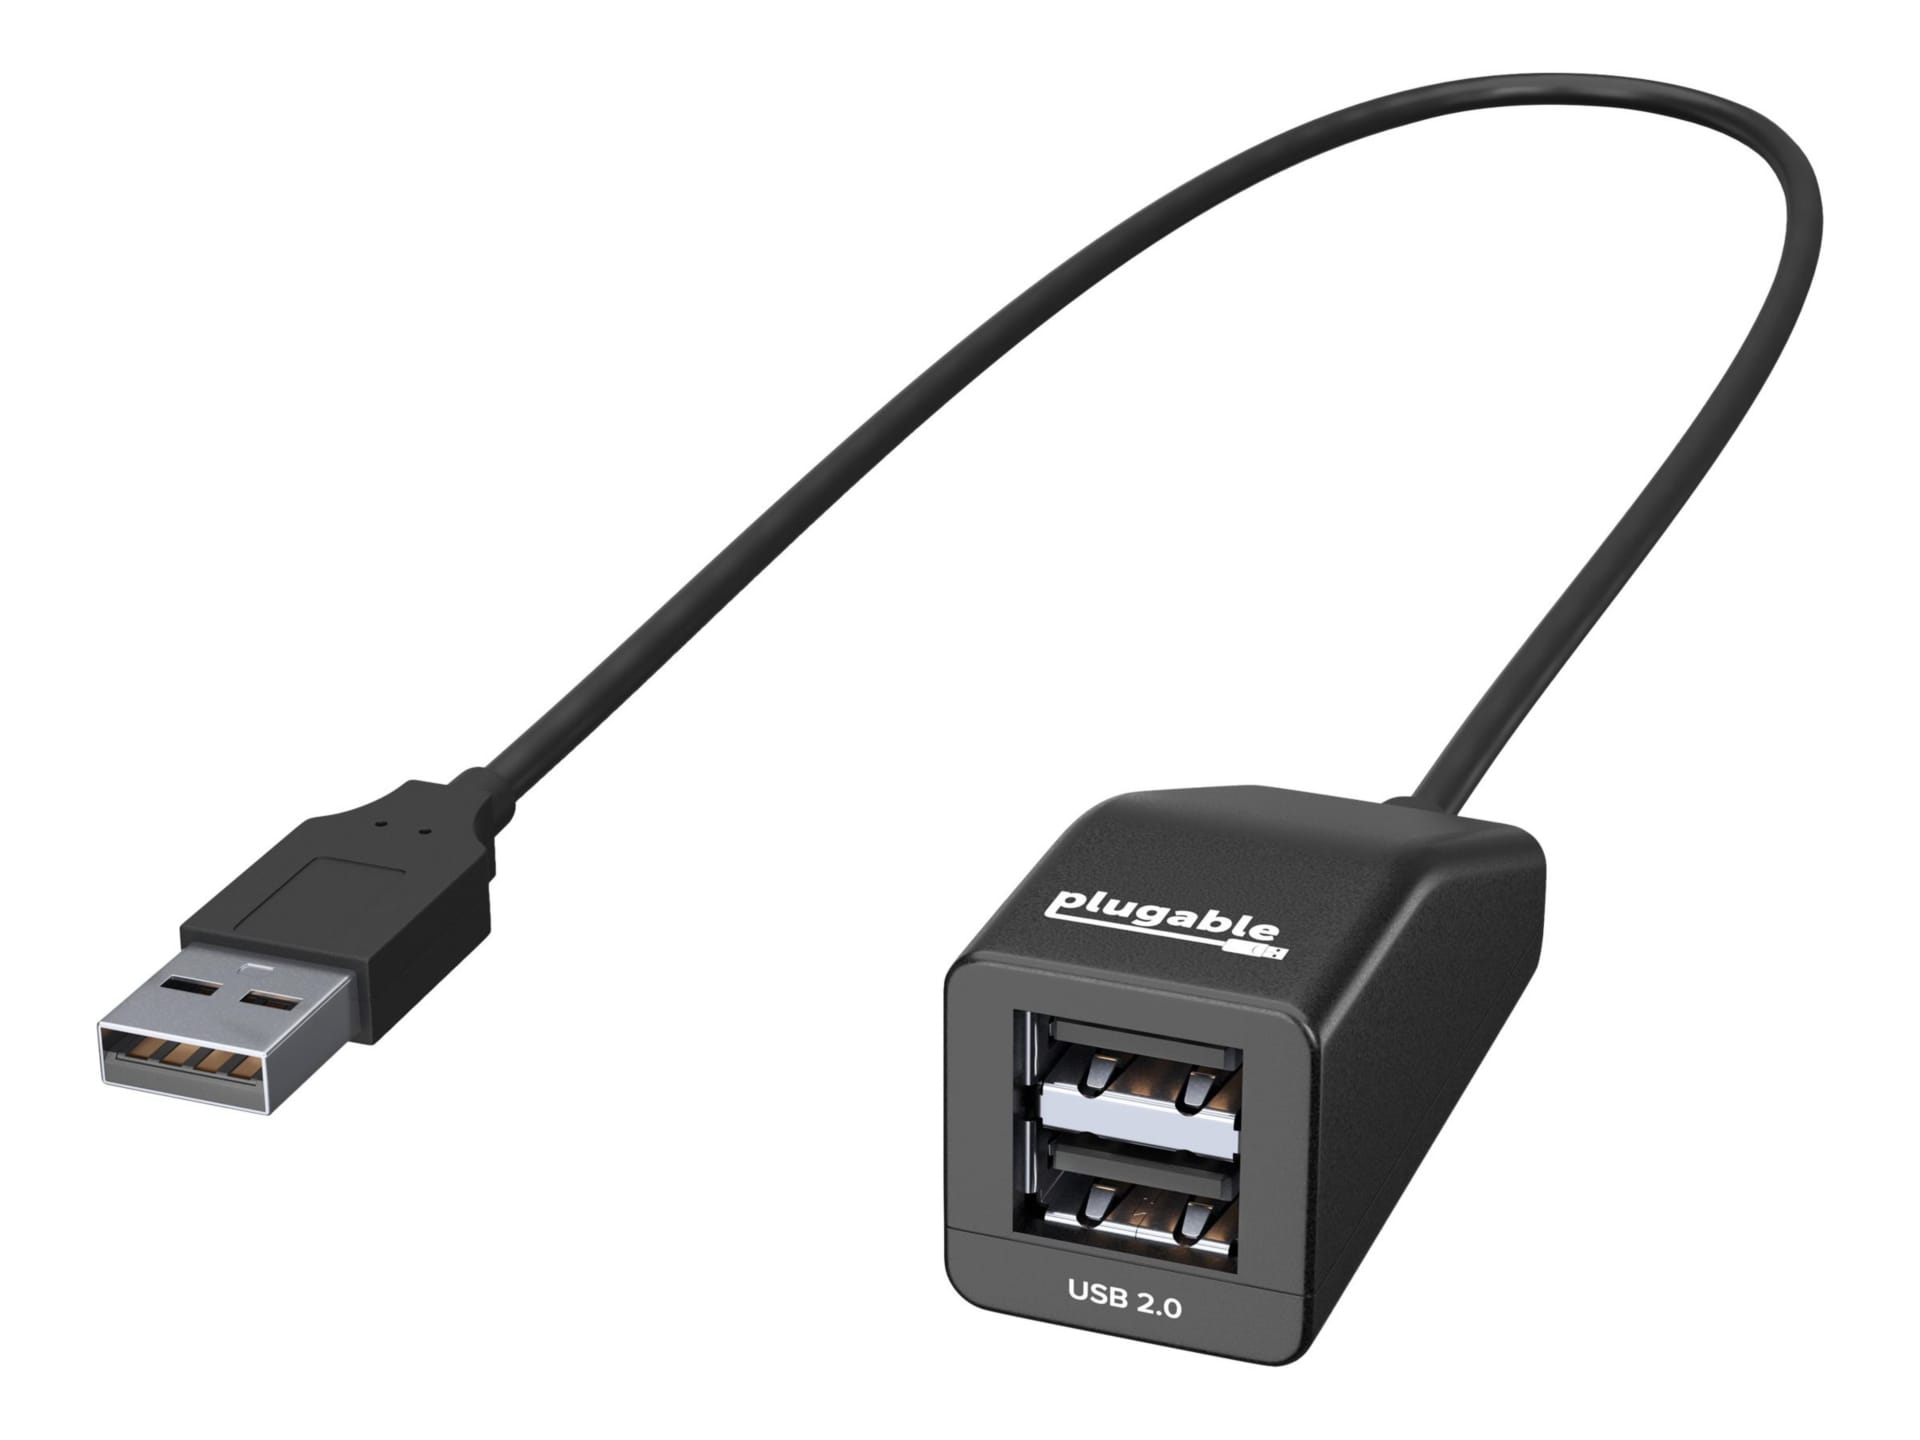 Plugable USB 2.0 2-Port High Speed Ultra Compact Hub Splitter (480 Mbps,USB 2.0,Windows,Linux,macOS,Chrome OS)